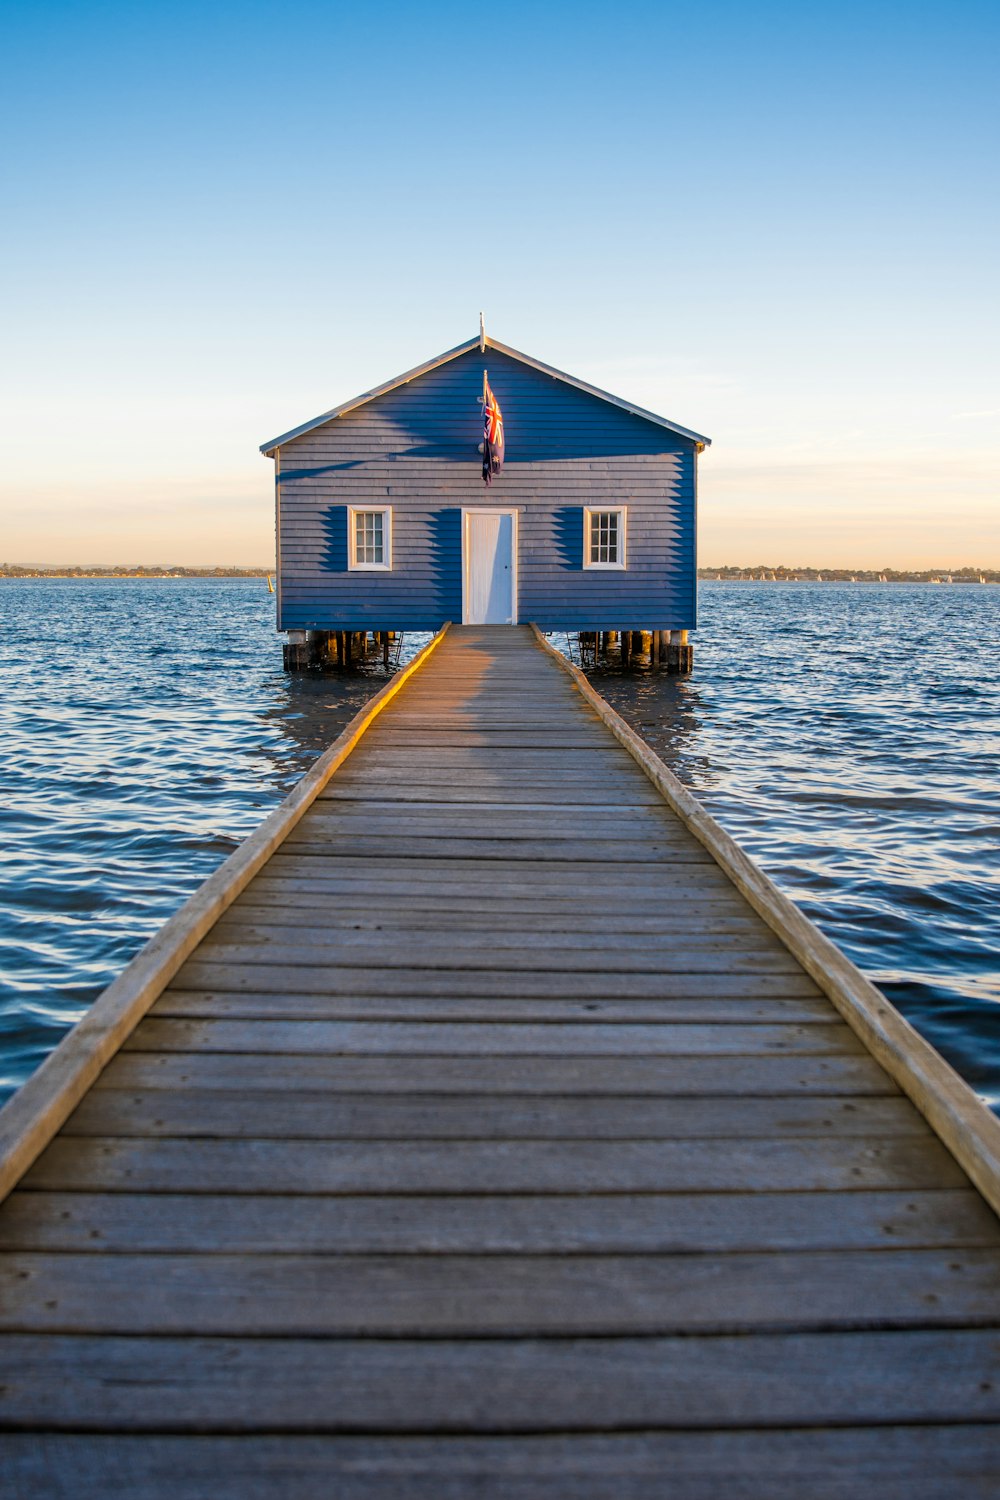 Casa de madeira azul e branca no mar sob o céu azul claro durante o dia